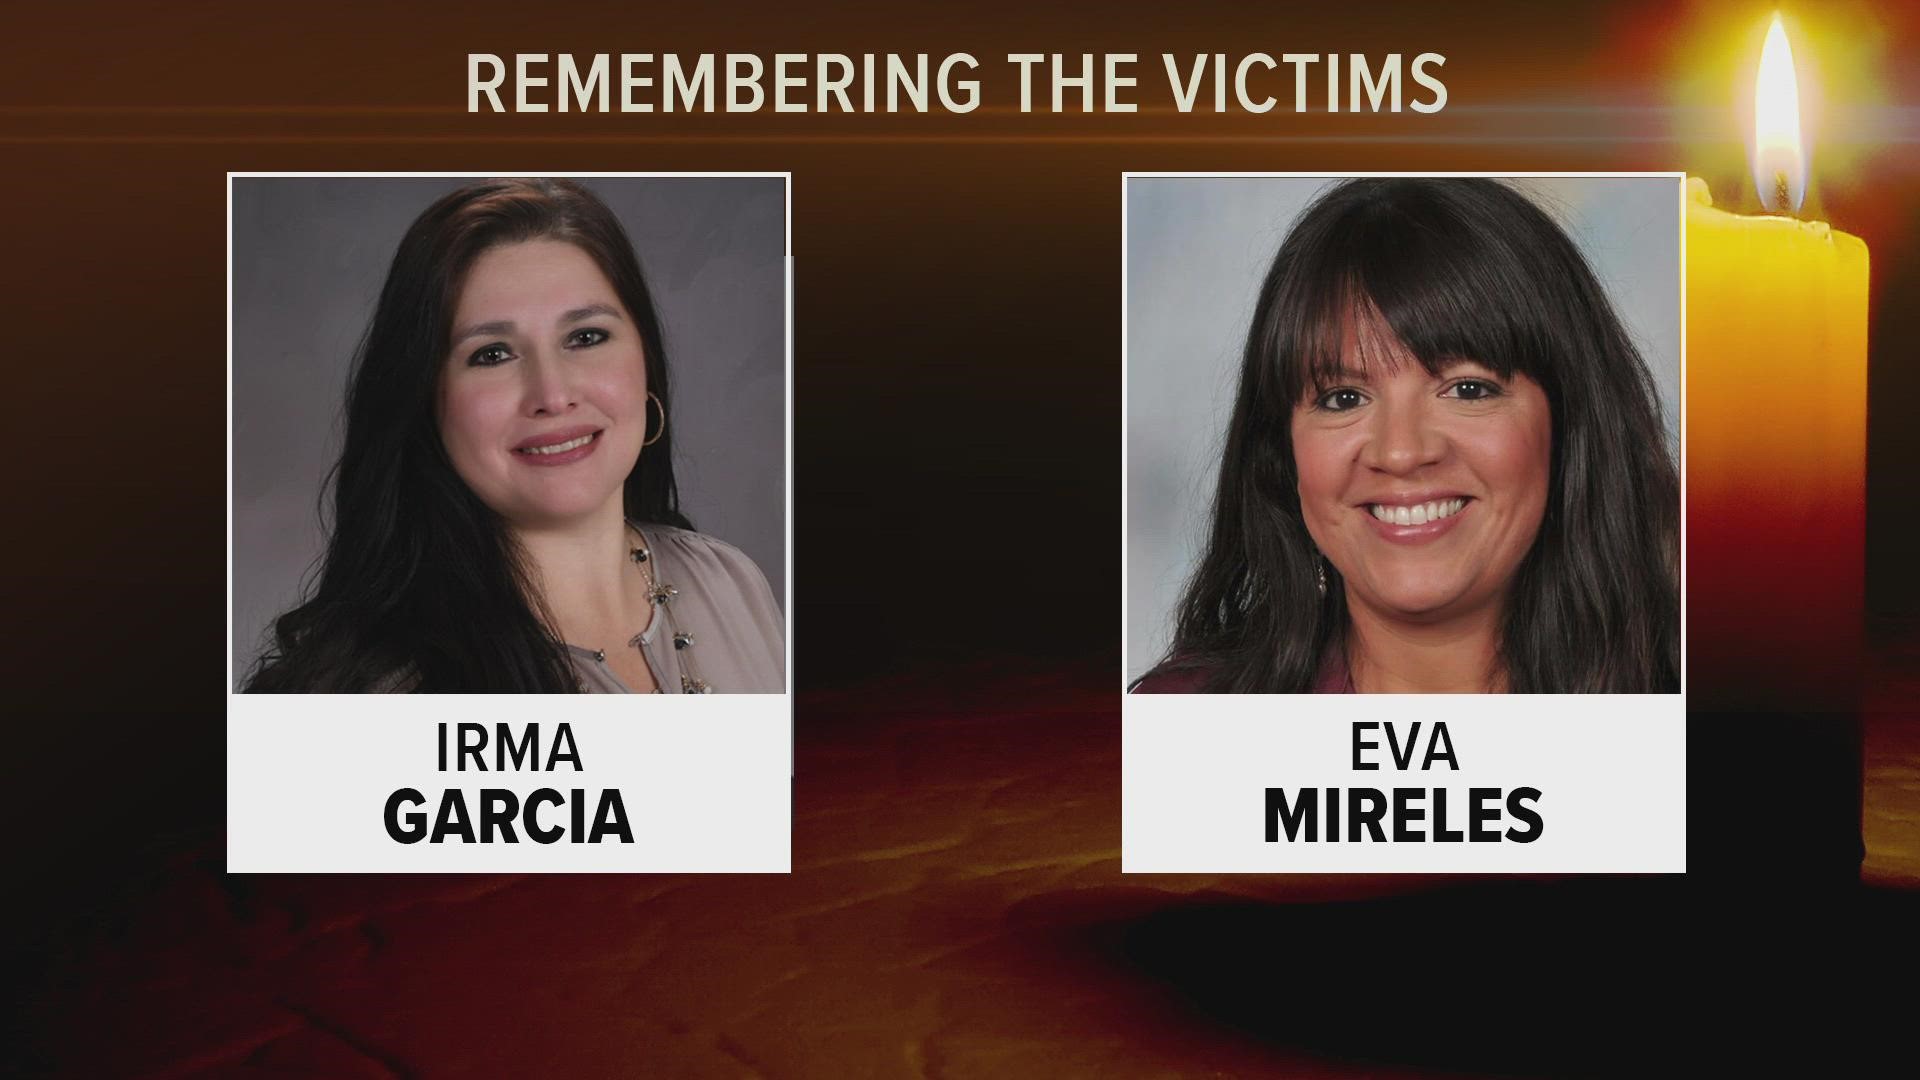 Eva Mireles and Irma Garcia are heroes.